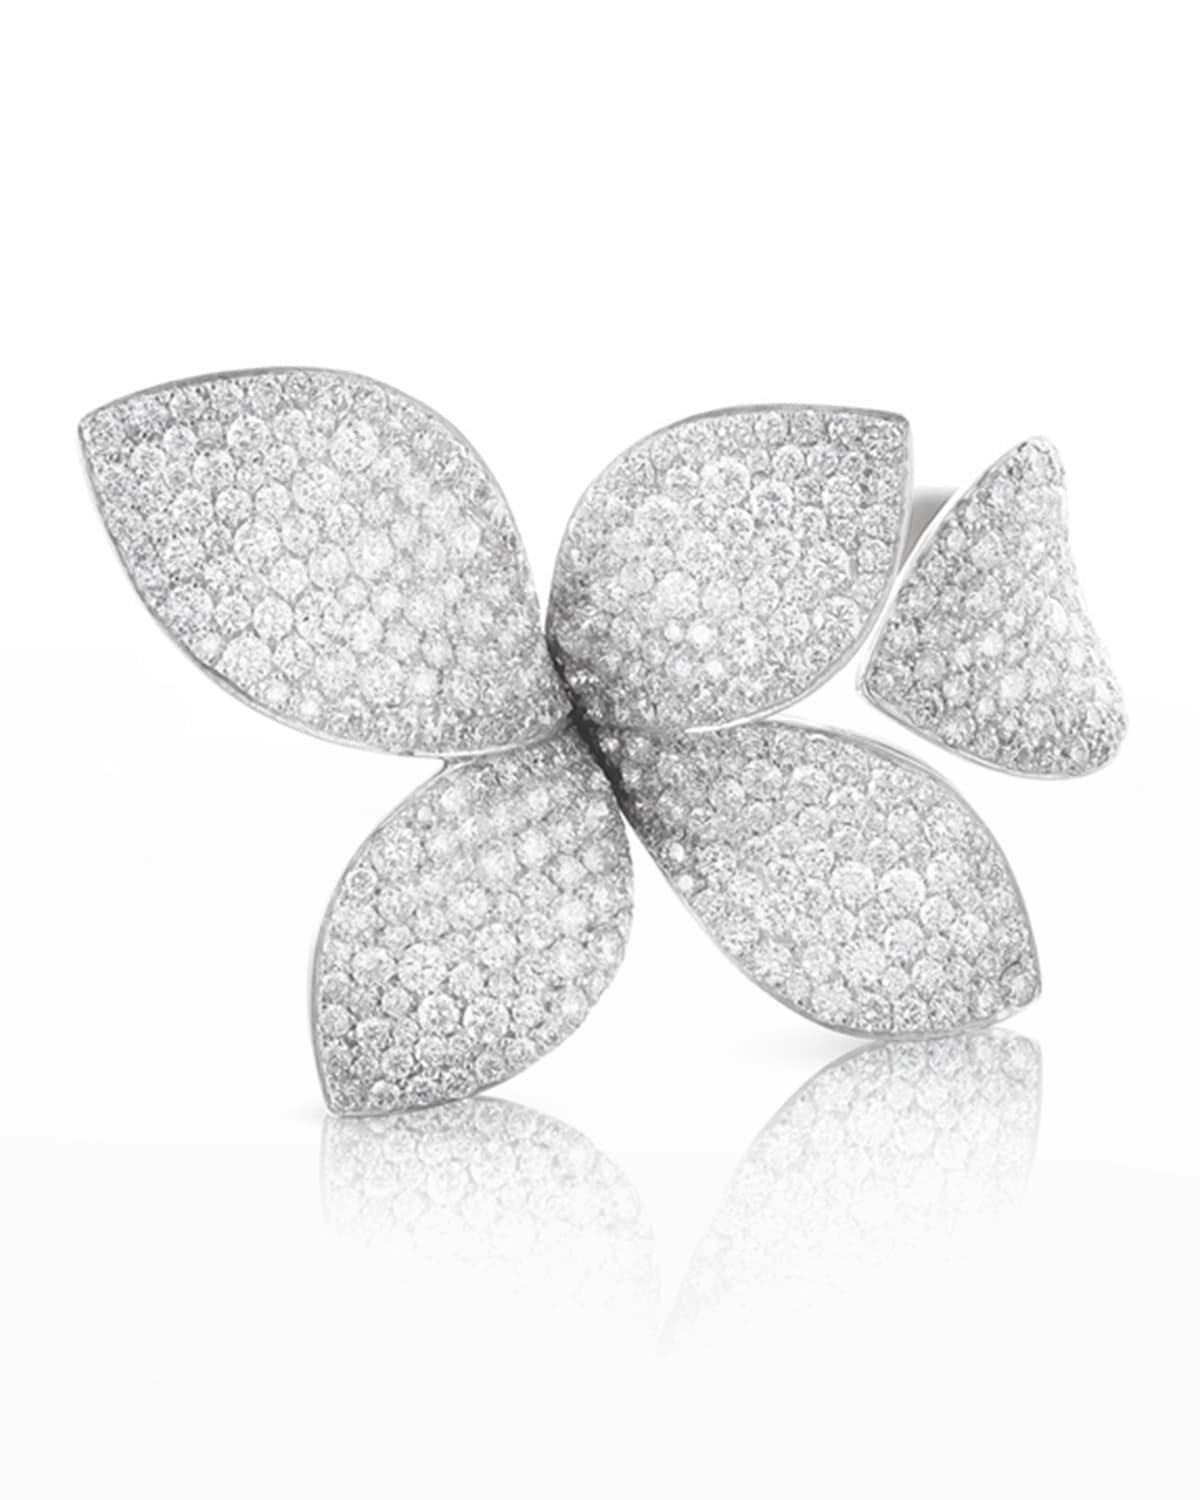 Giardini Secreti 18K White Gold Diamond 5-Petal Ring, Size 7